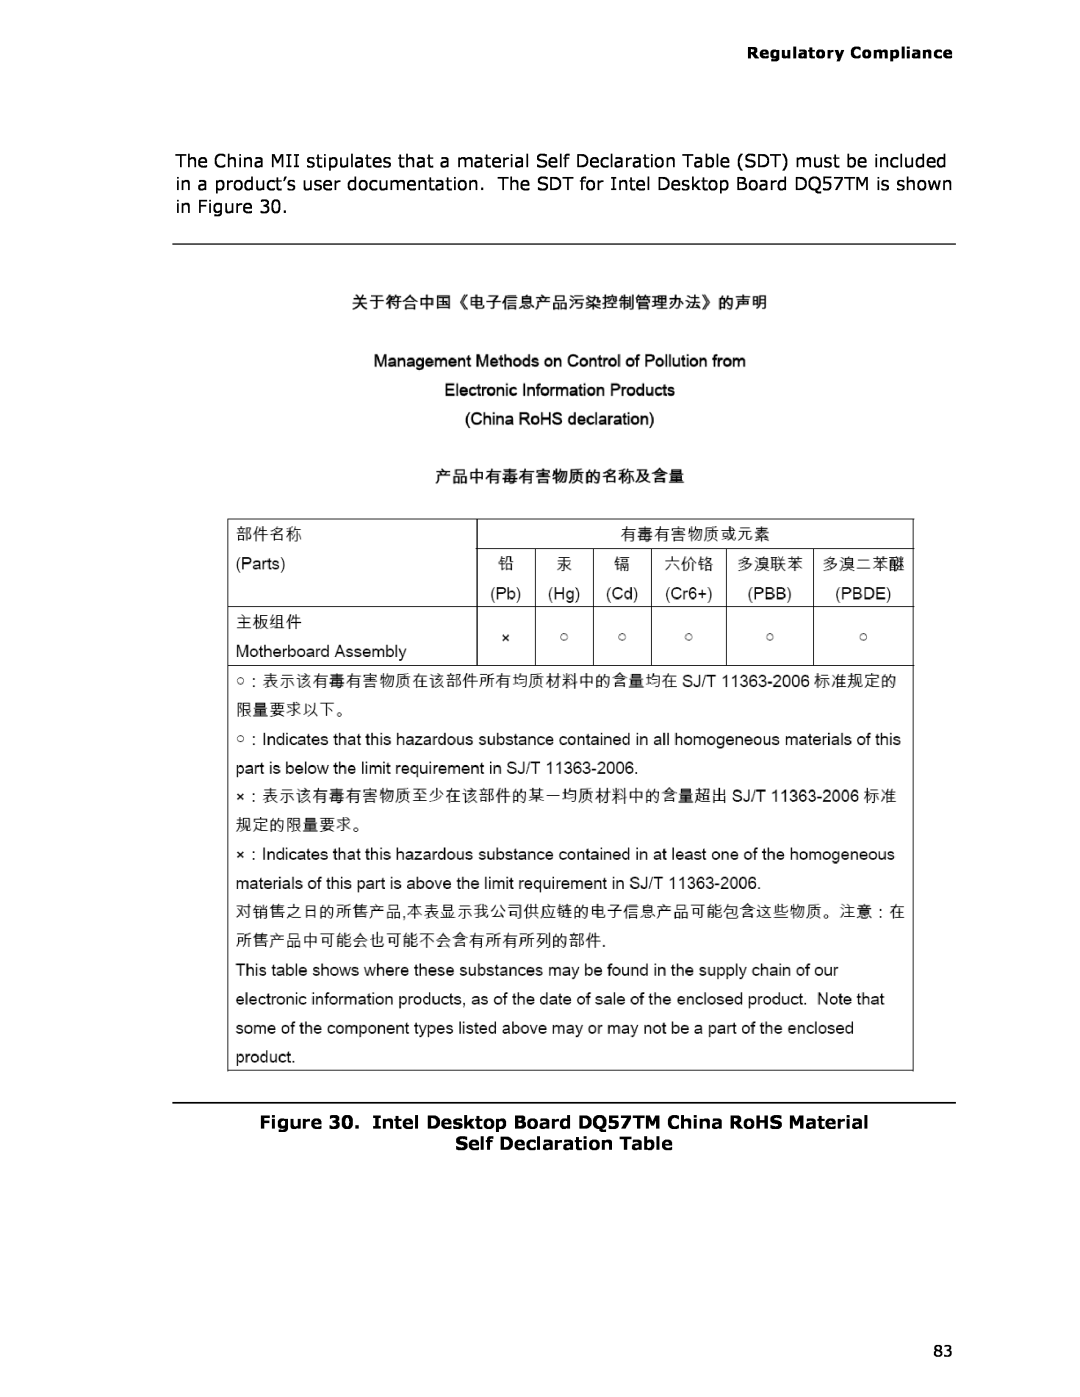 Intel DQ57TM manual Self Declaration Table 